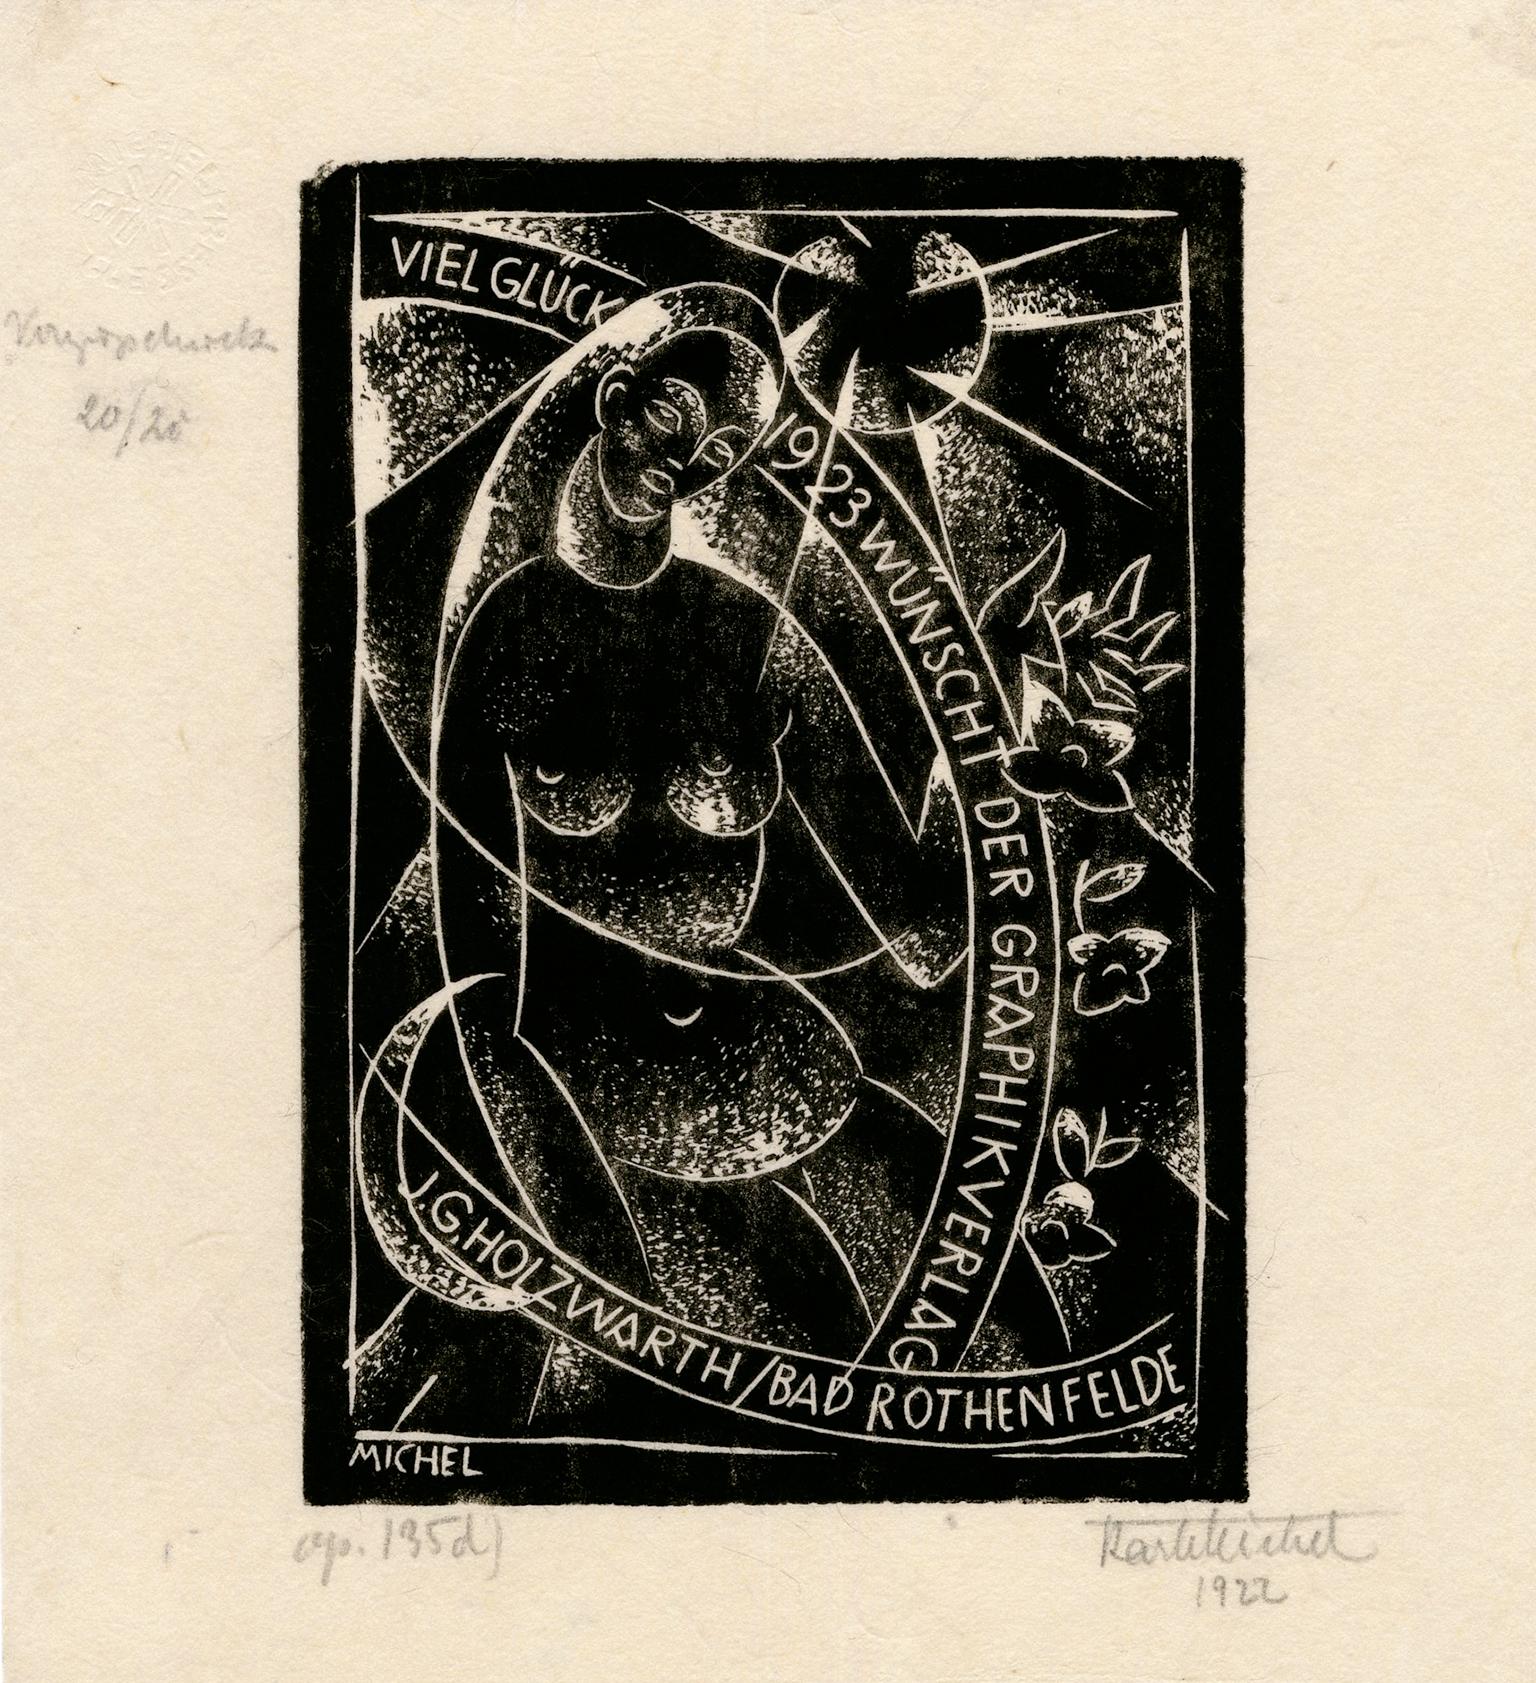 Karl Michel Figurative Print - 'Viel Gluck 1923' (Good Luck Wishes)  — 1920s German Expressionism